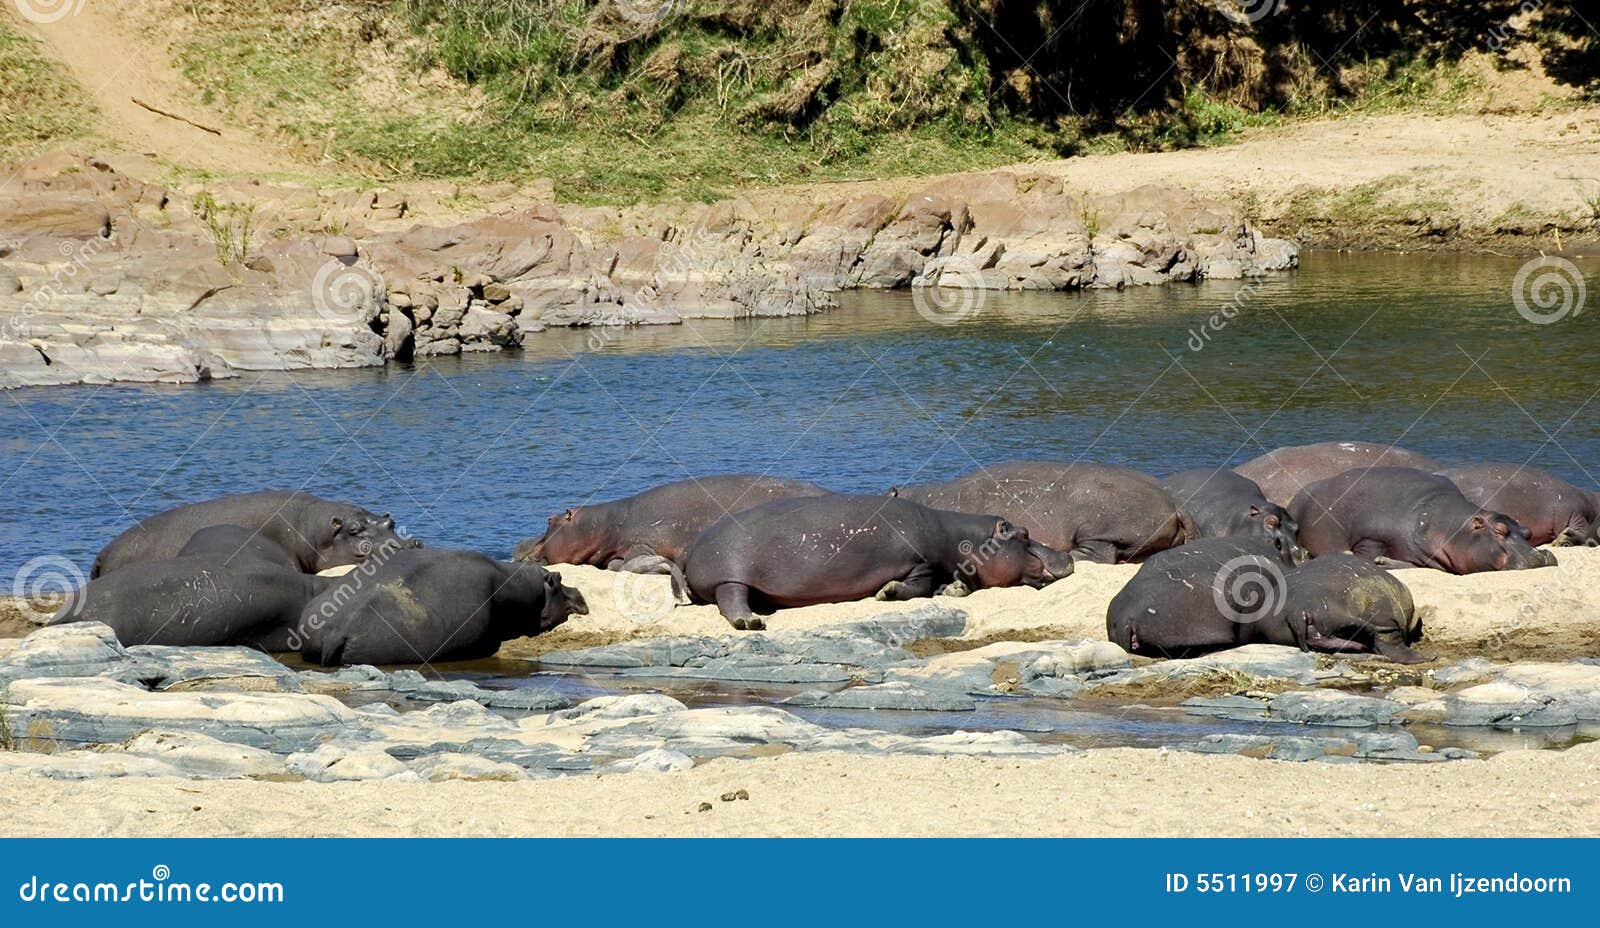 hippos resting on riverbank